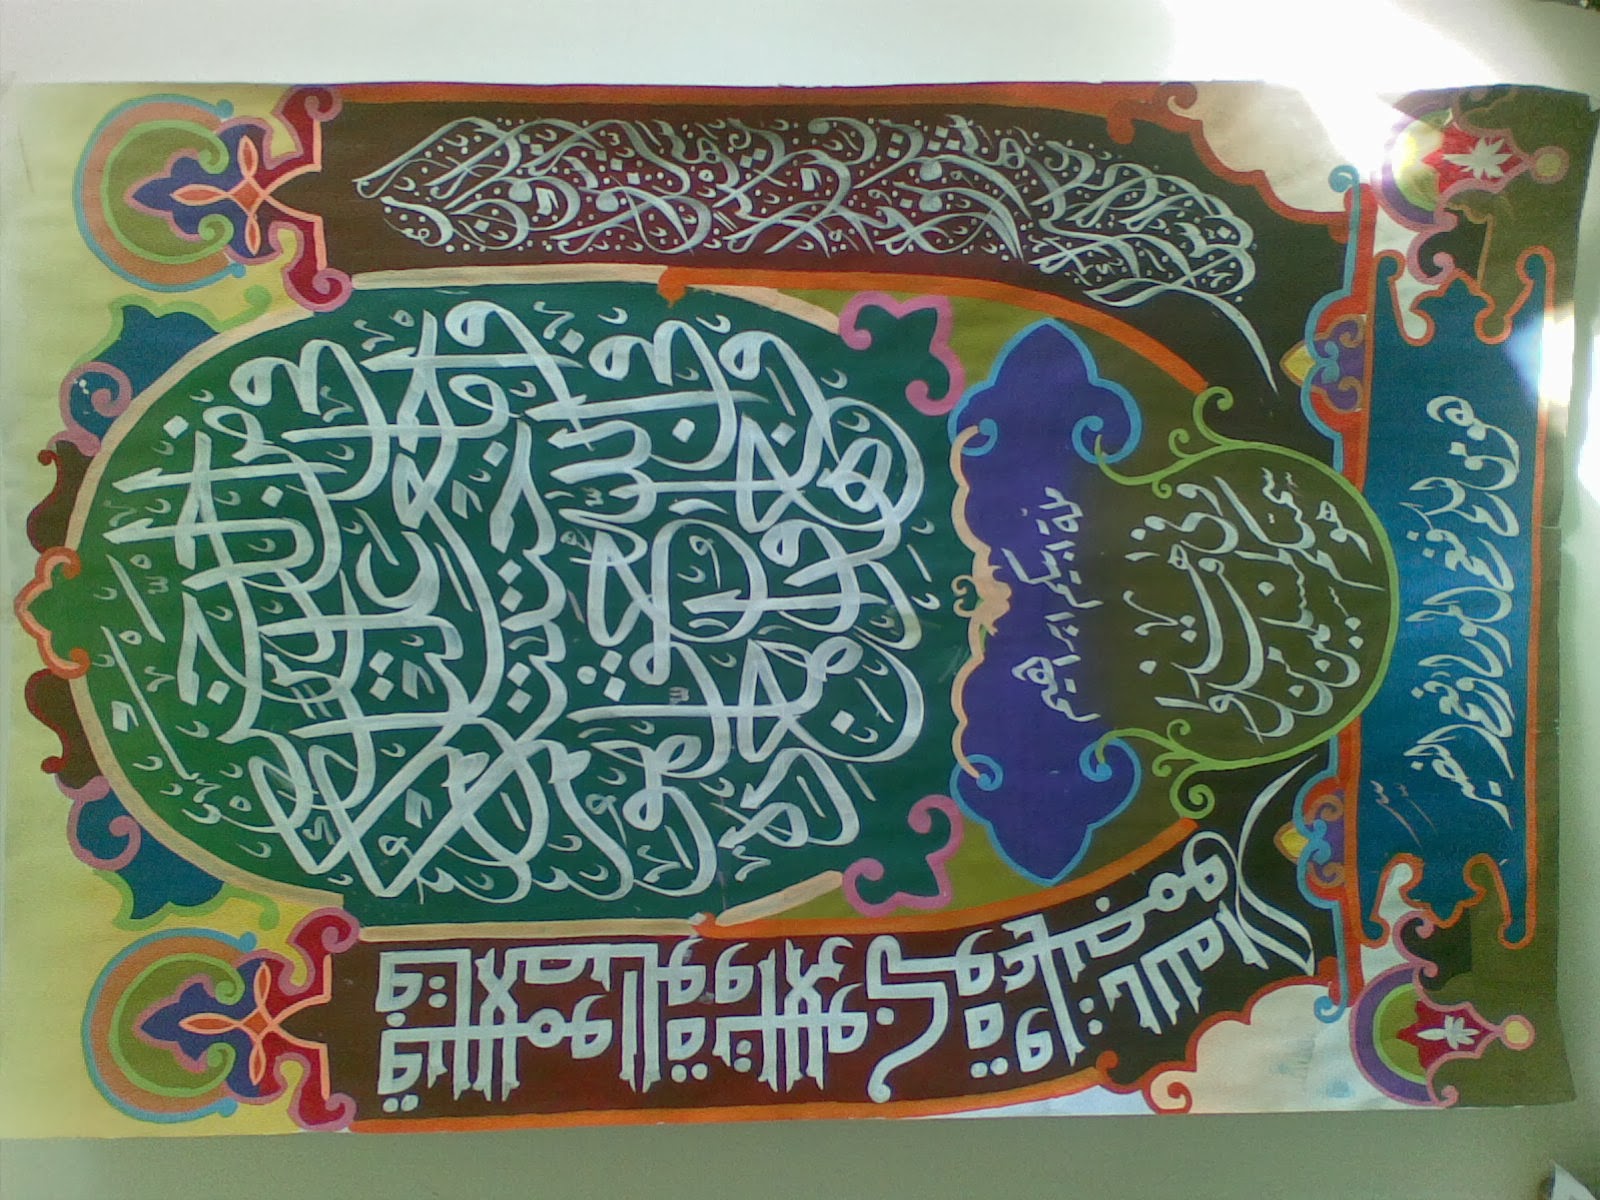 Macam macam kaligrafi mushaf